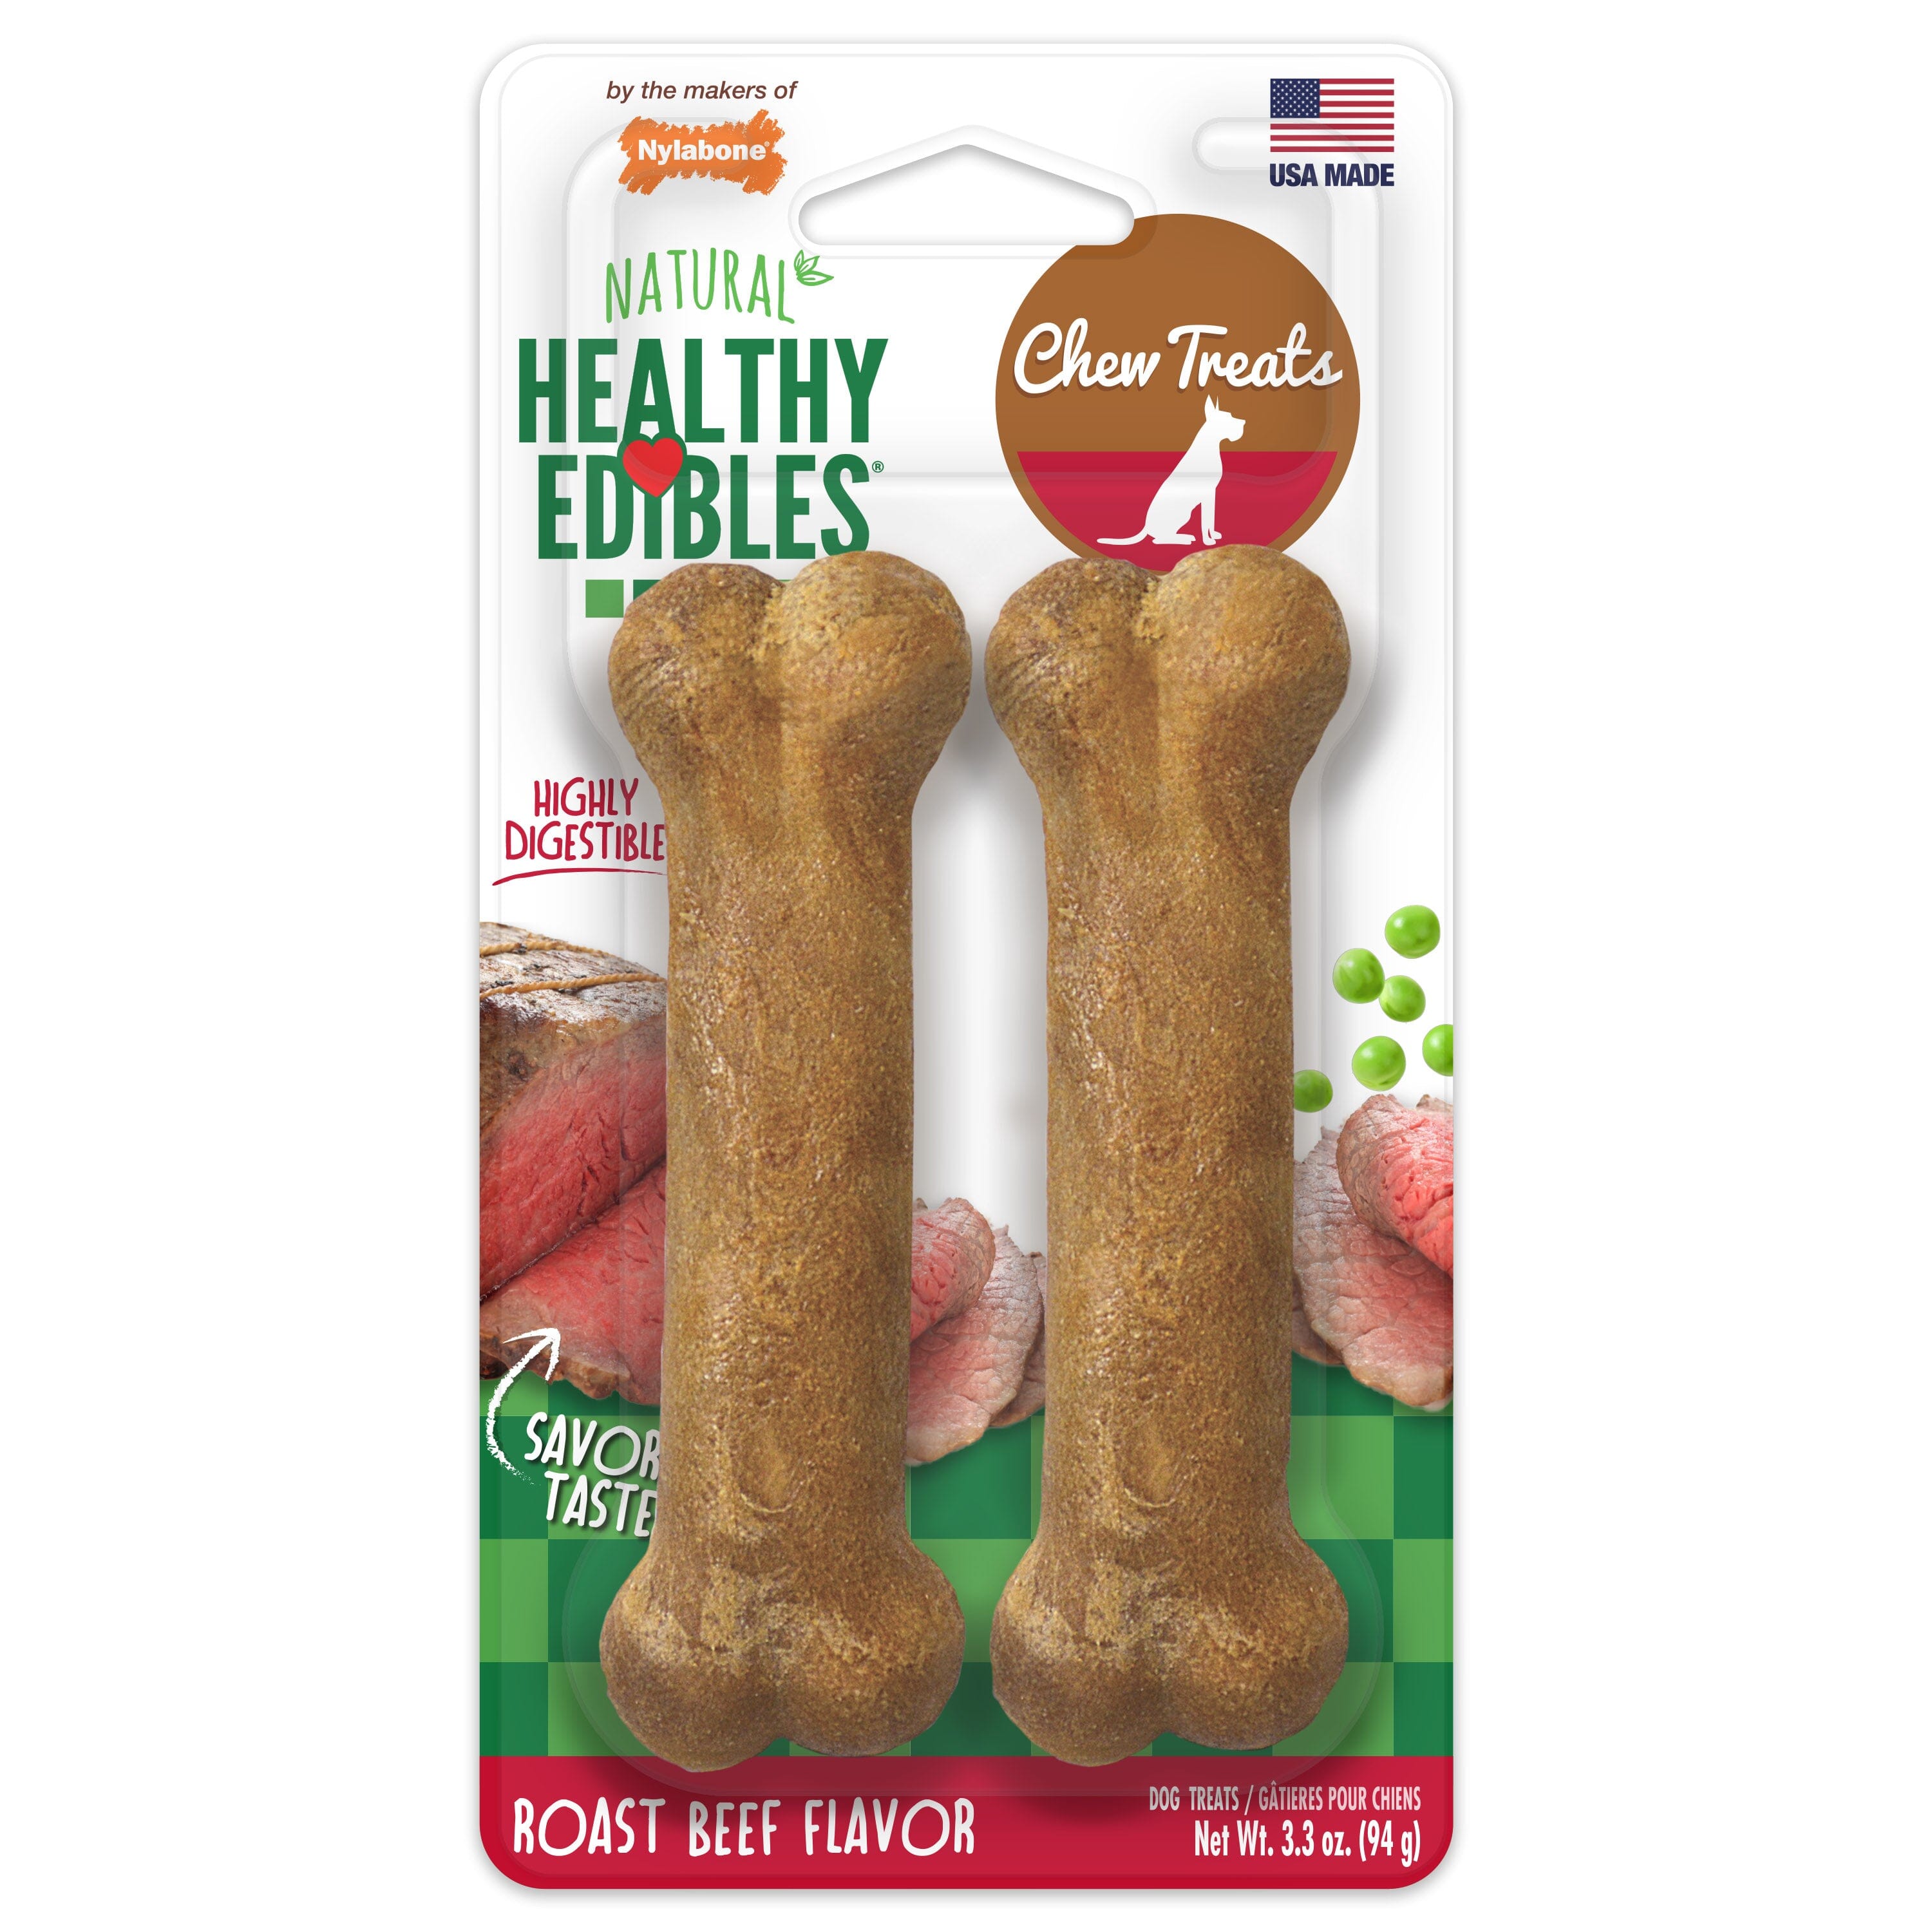 Nylabone Healthy Edibles Roast Beef Flavor Chew Treats for Dog Roast Beef - Small/Regular - 2 Count  